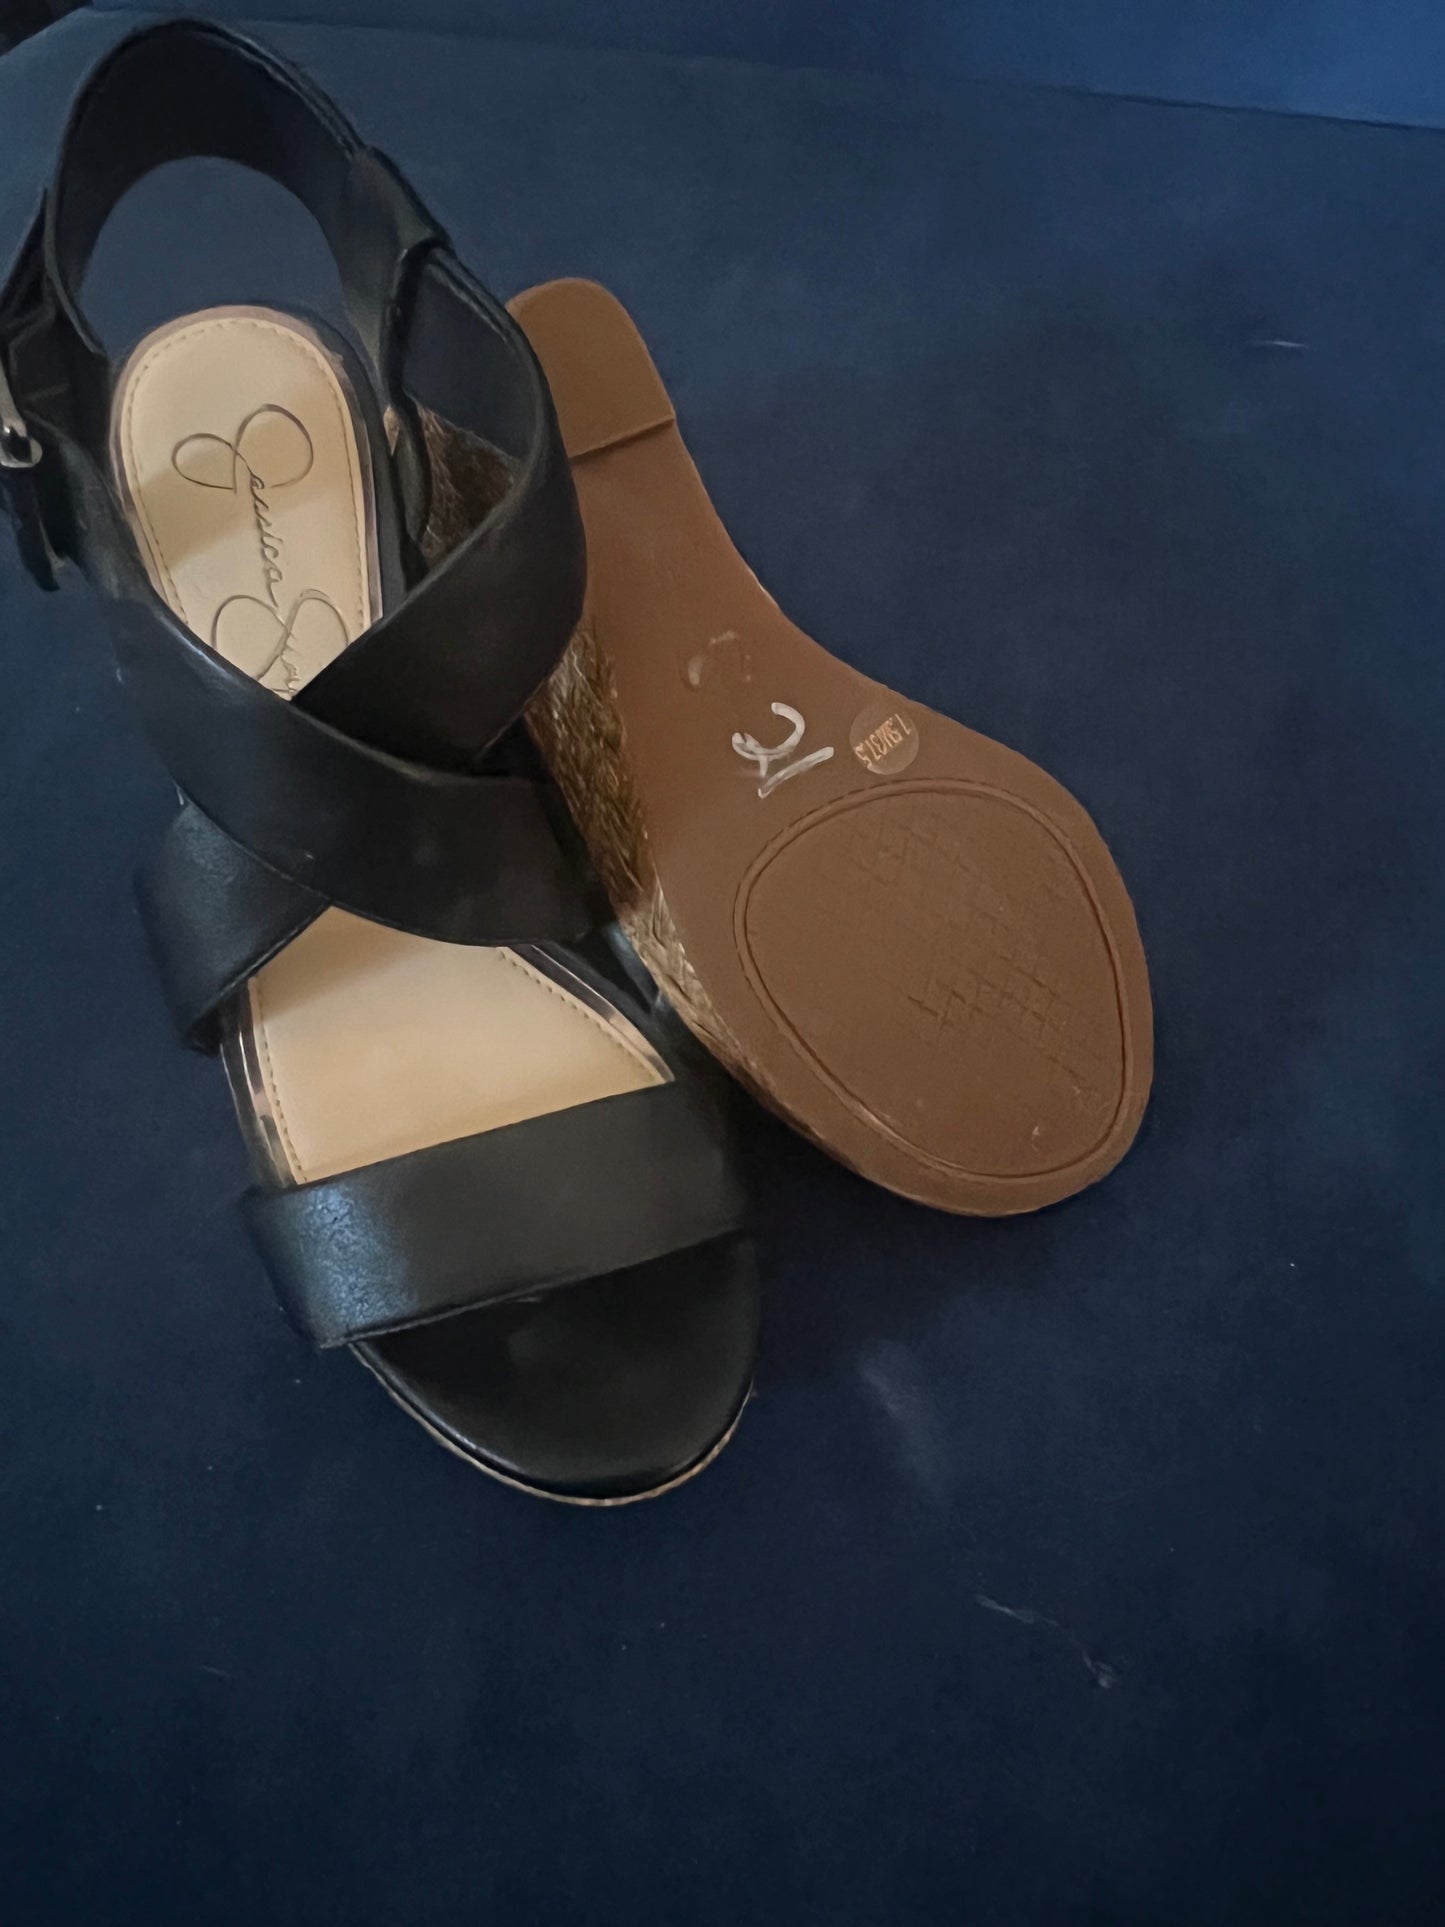 Jessica Simpson Wedge Sandals - 7.5 - New